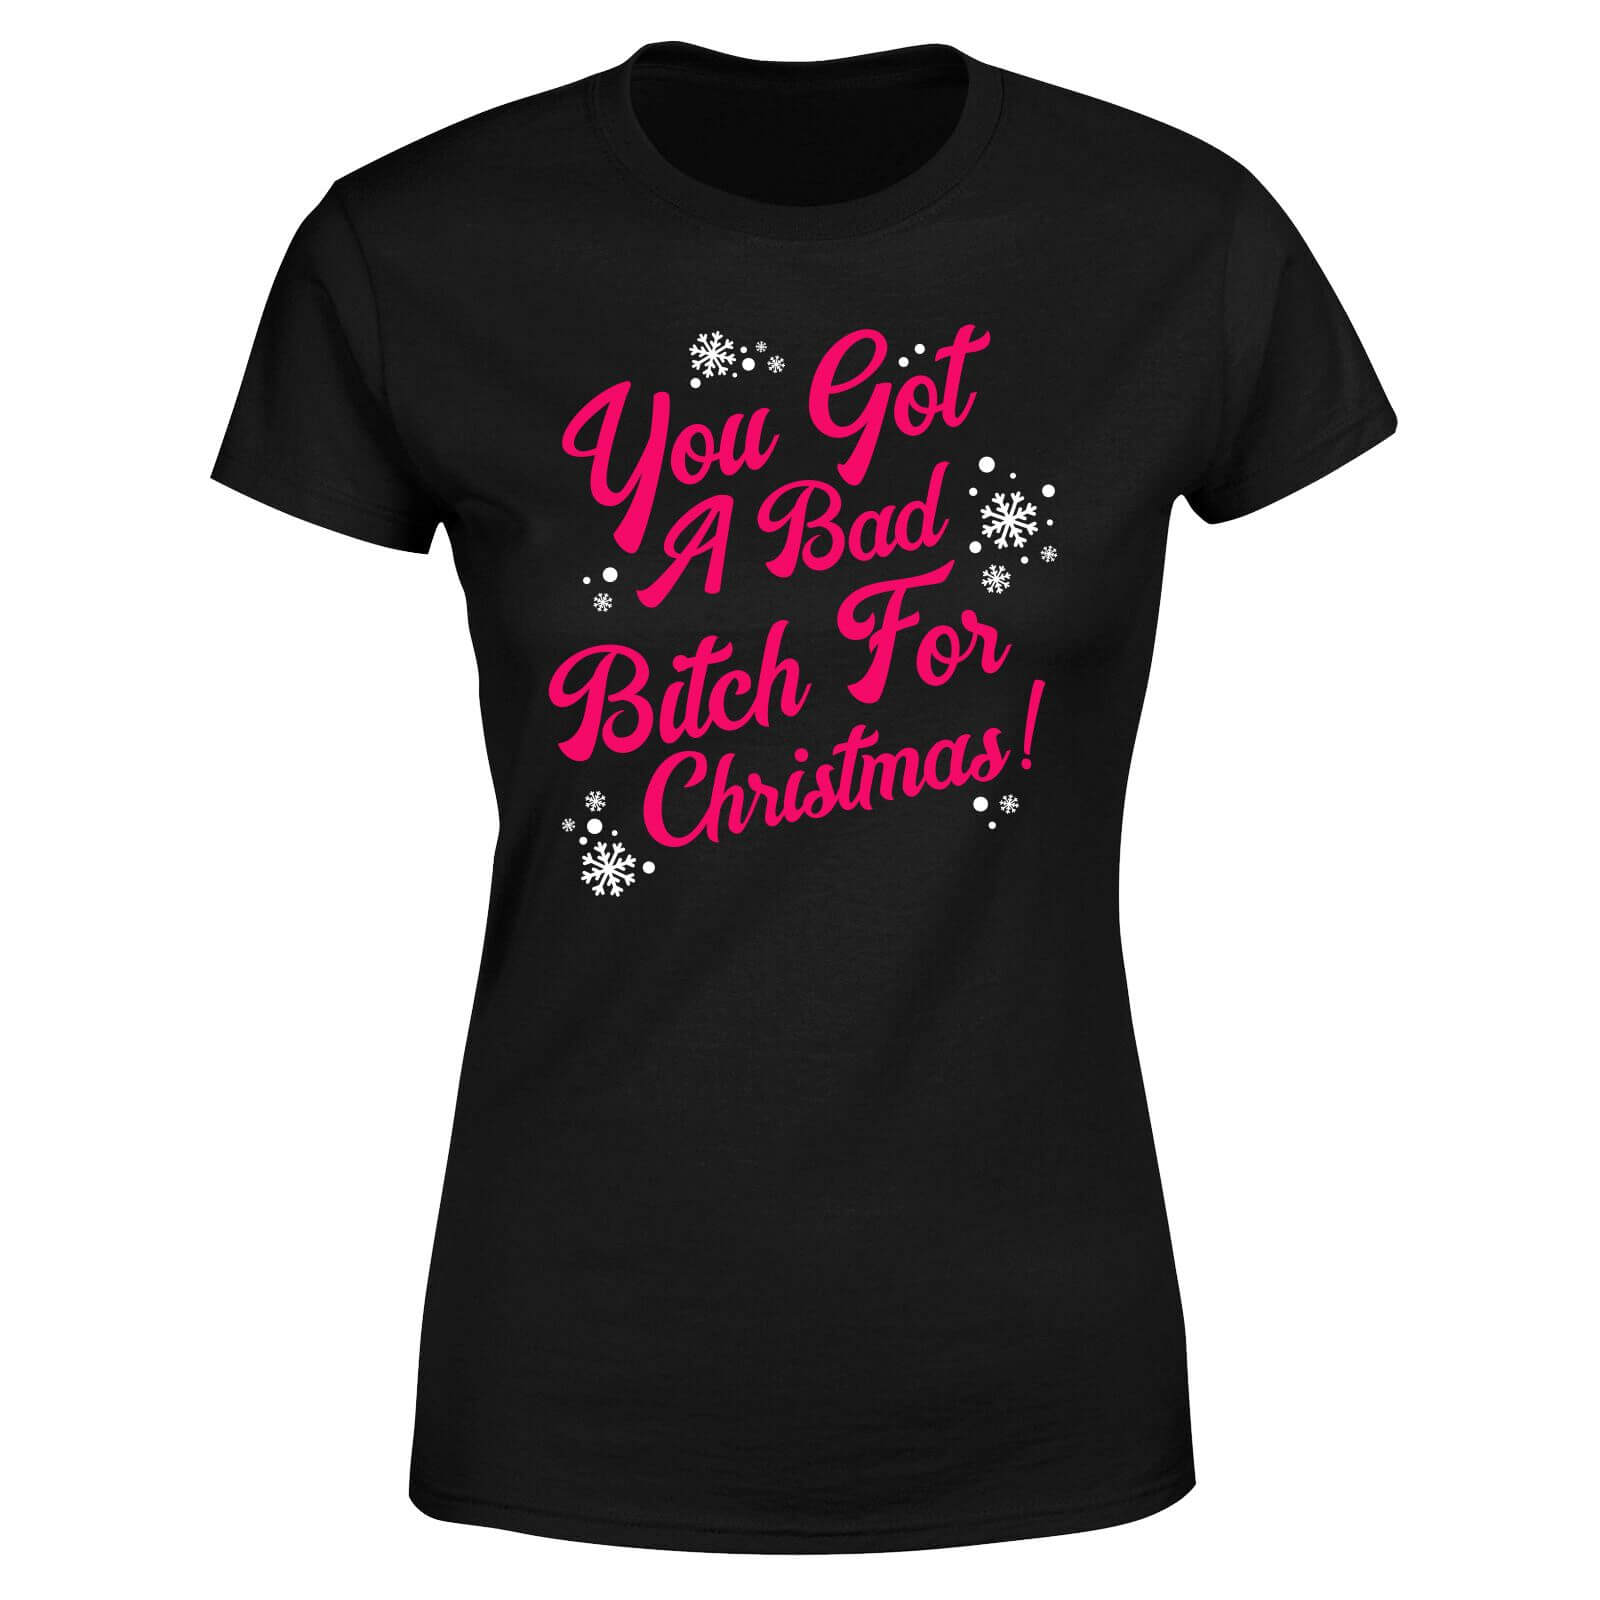 You Got A Bad Bitch For Christmas Women's T-Shirt - Black - XS - Black